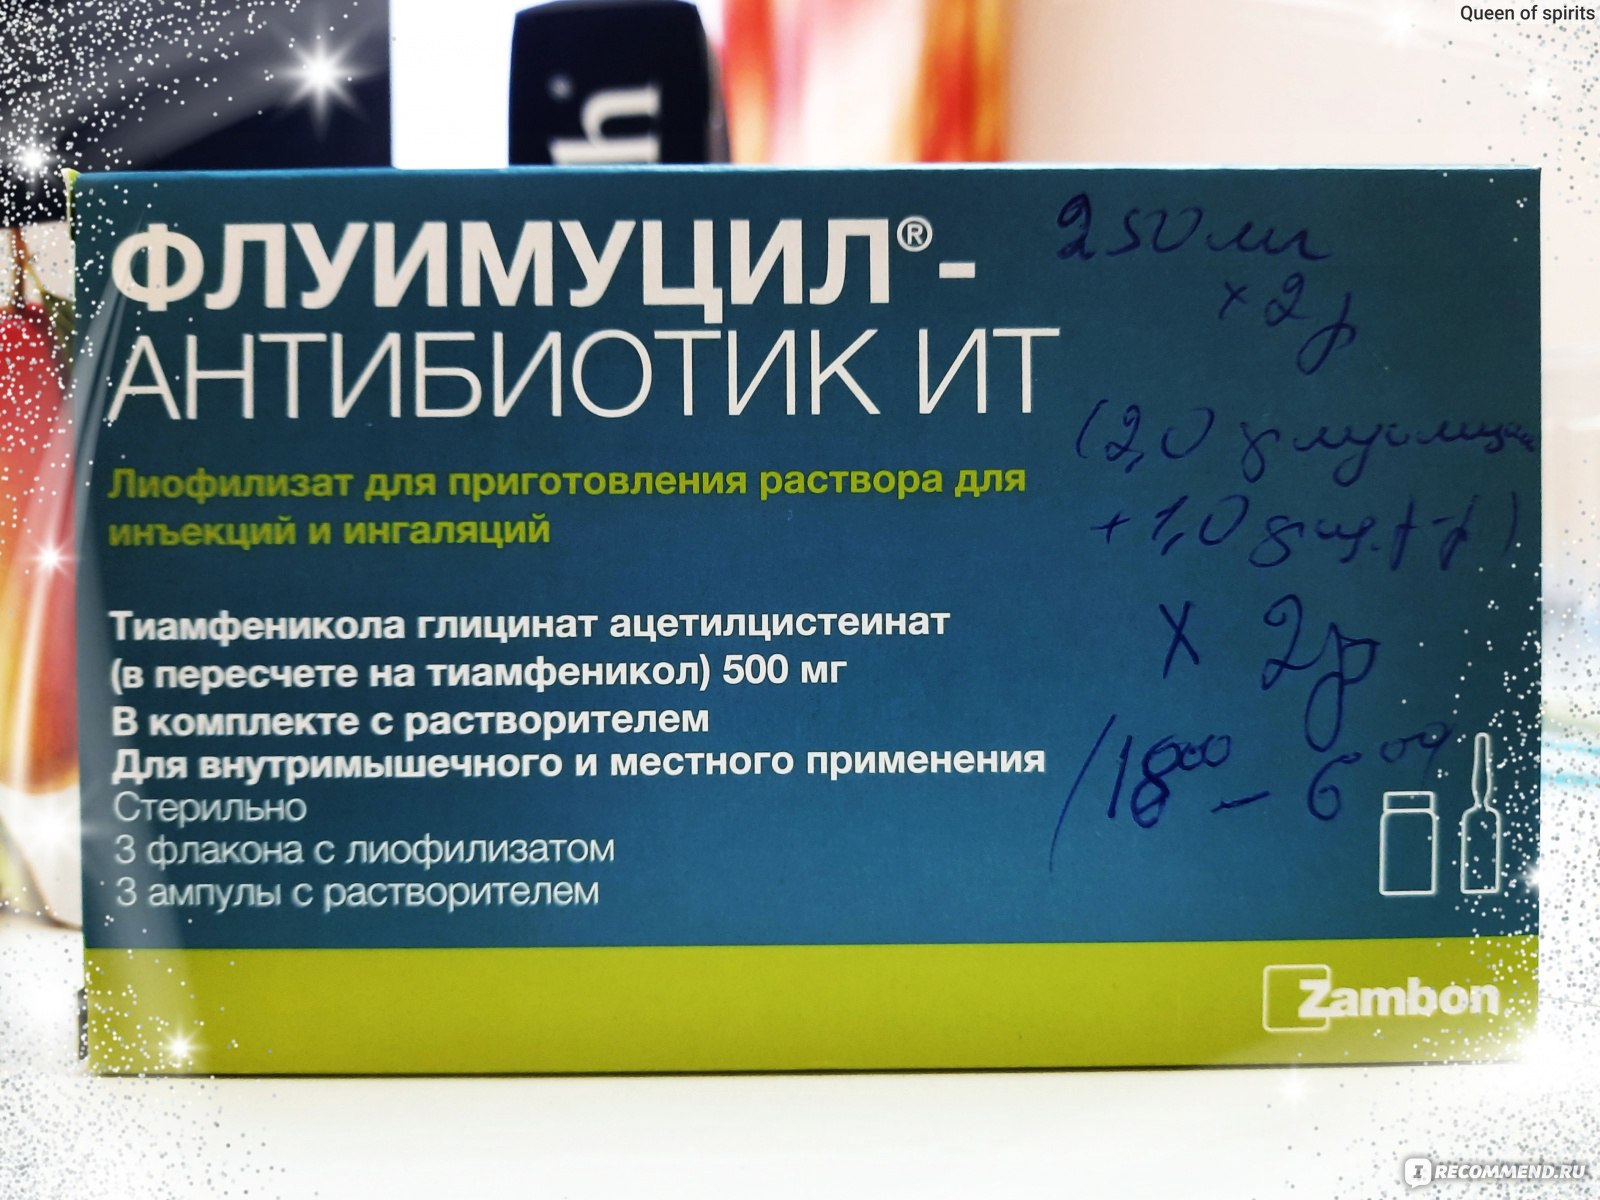 Антибиотик Zambon Флуимуцил-антибиотик ИТ (для ингаляций) - «Лечили .